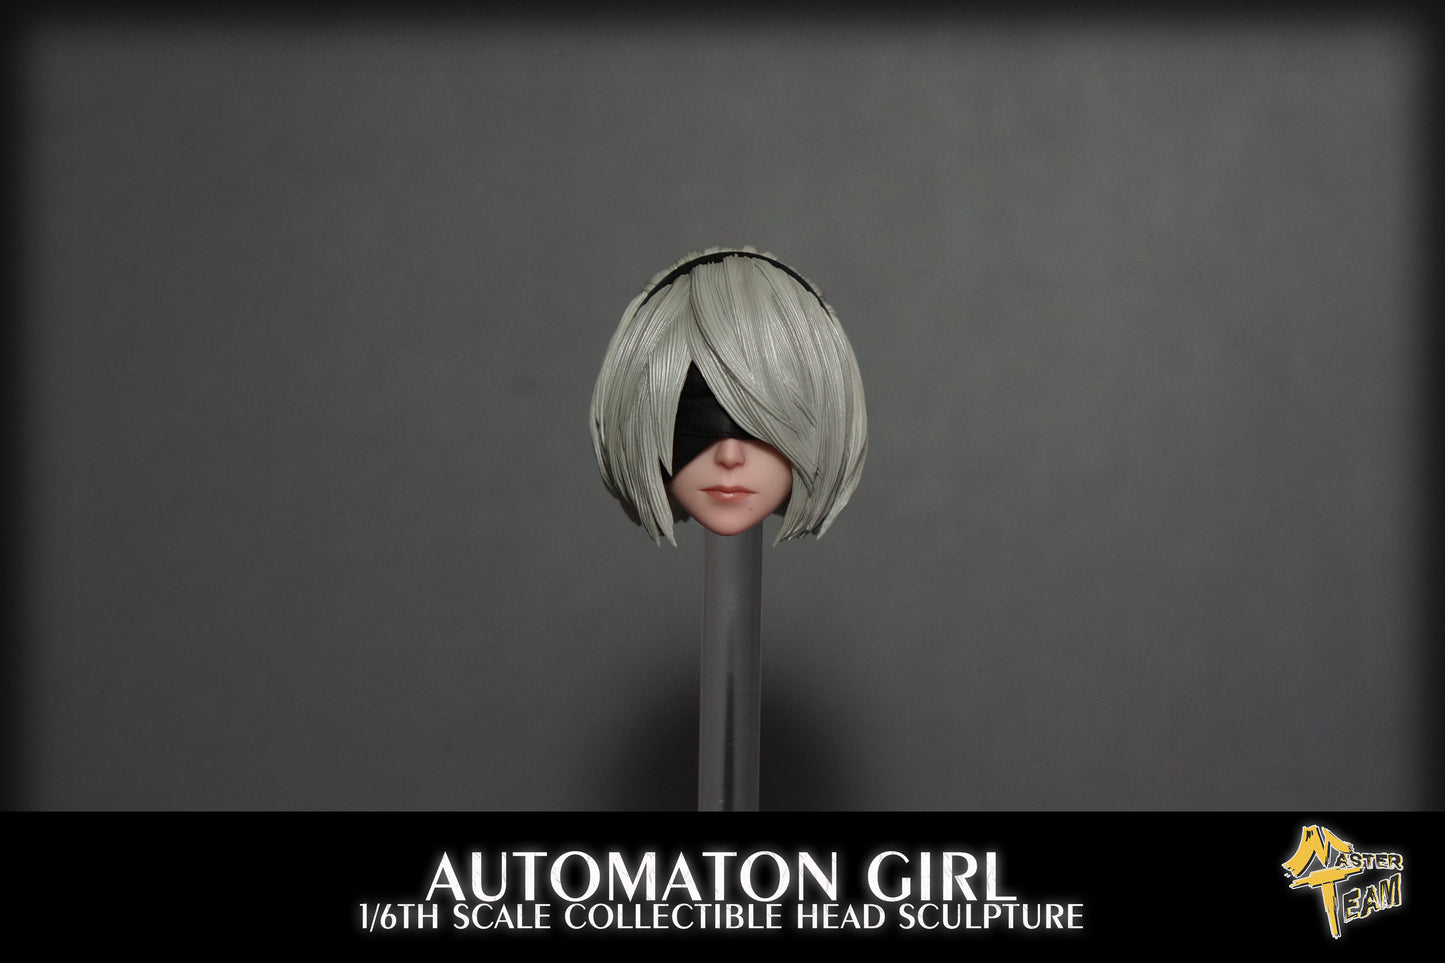 [PEDIDO] Cabeza Automaton Girl marca Master Team MT011 escala 1/6